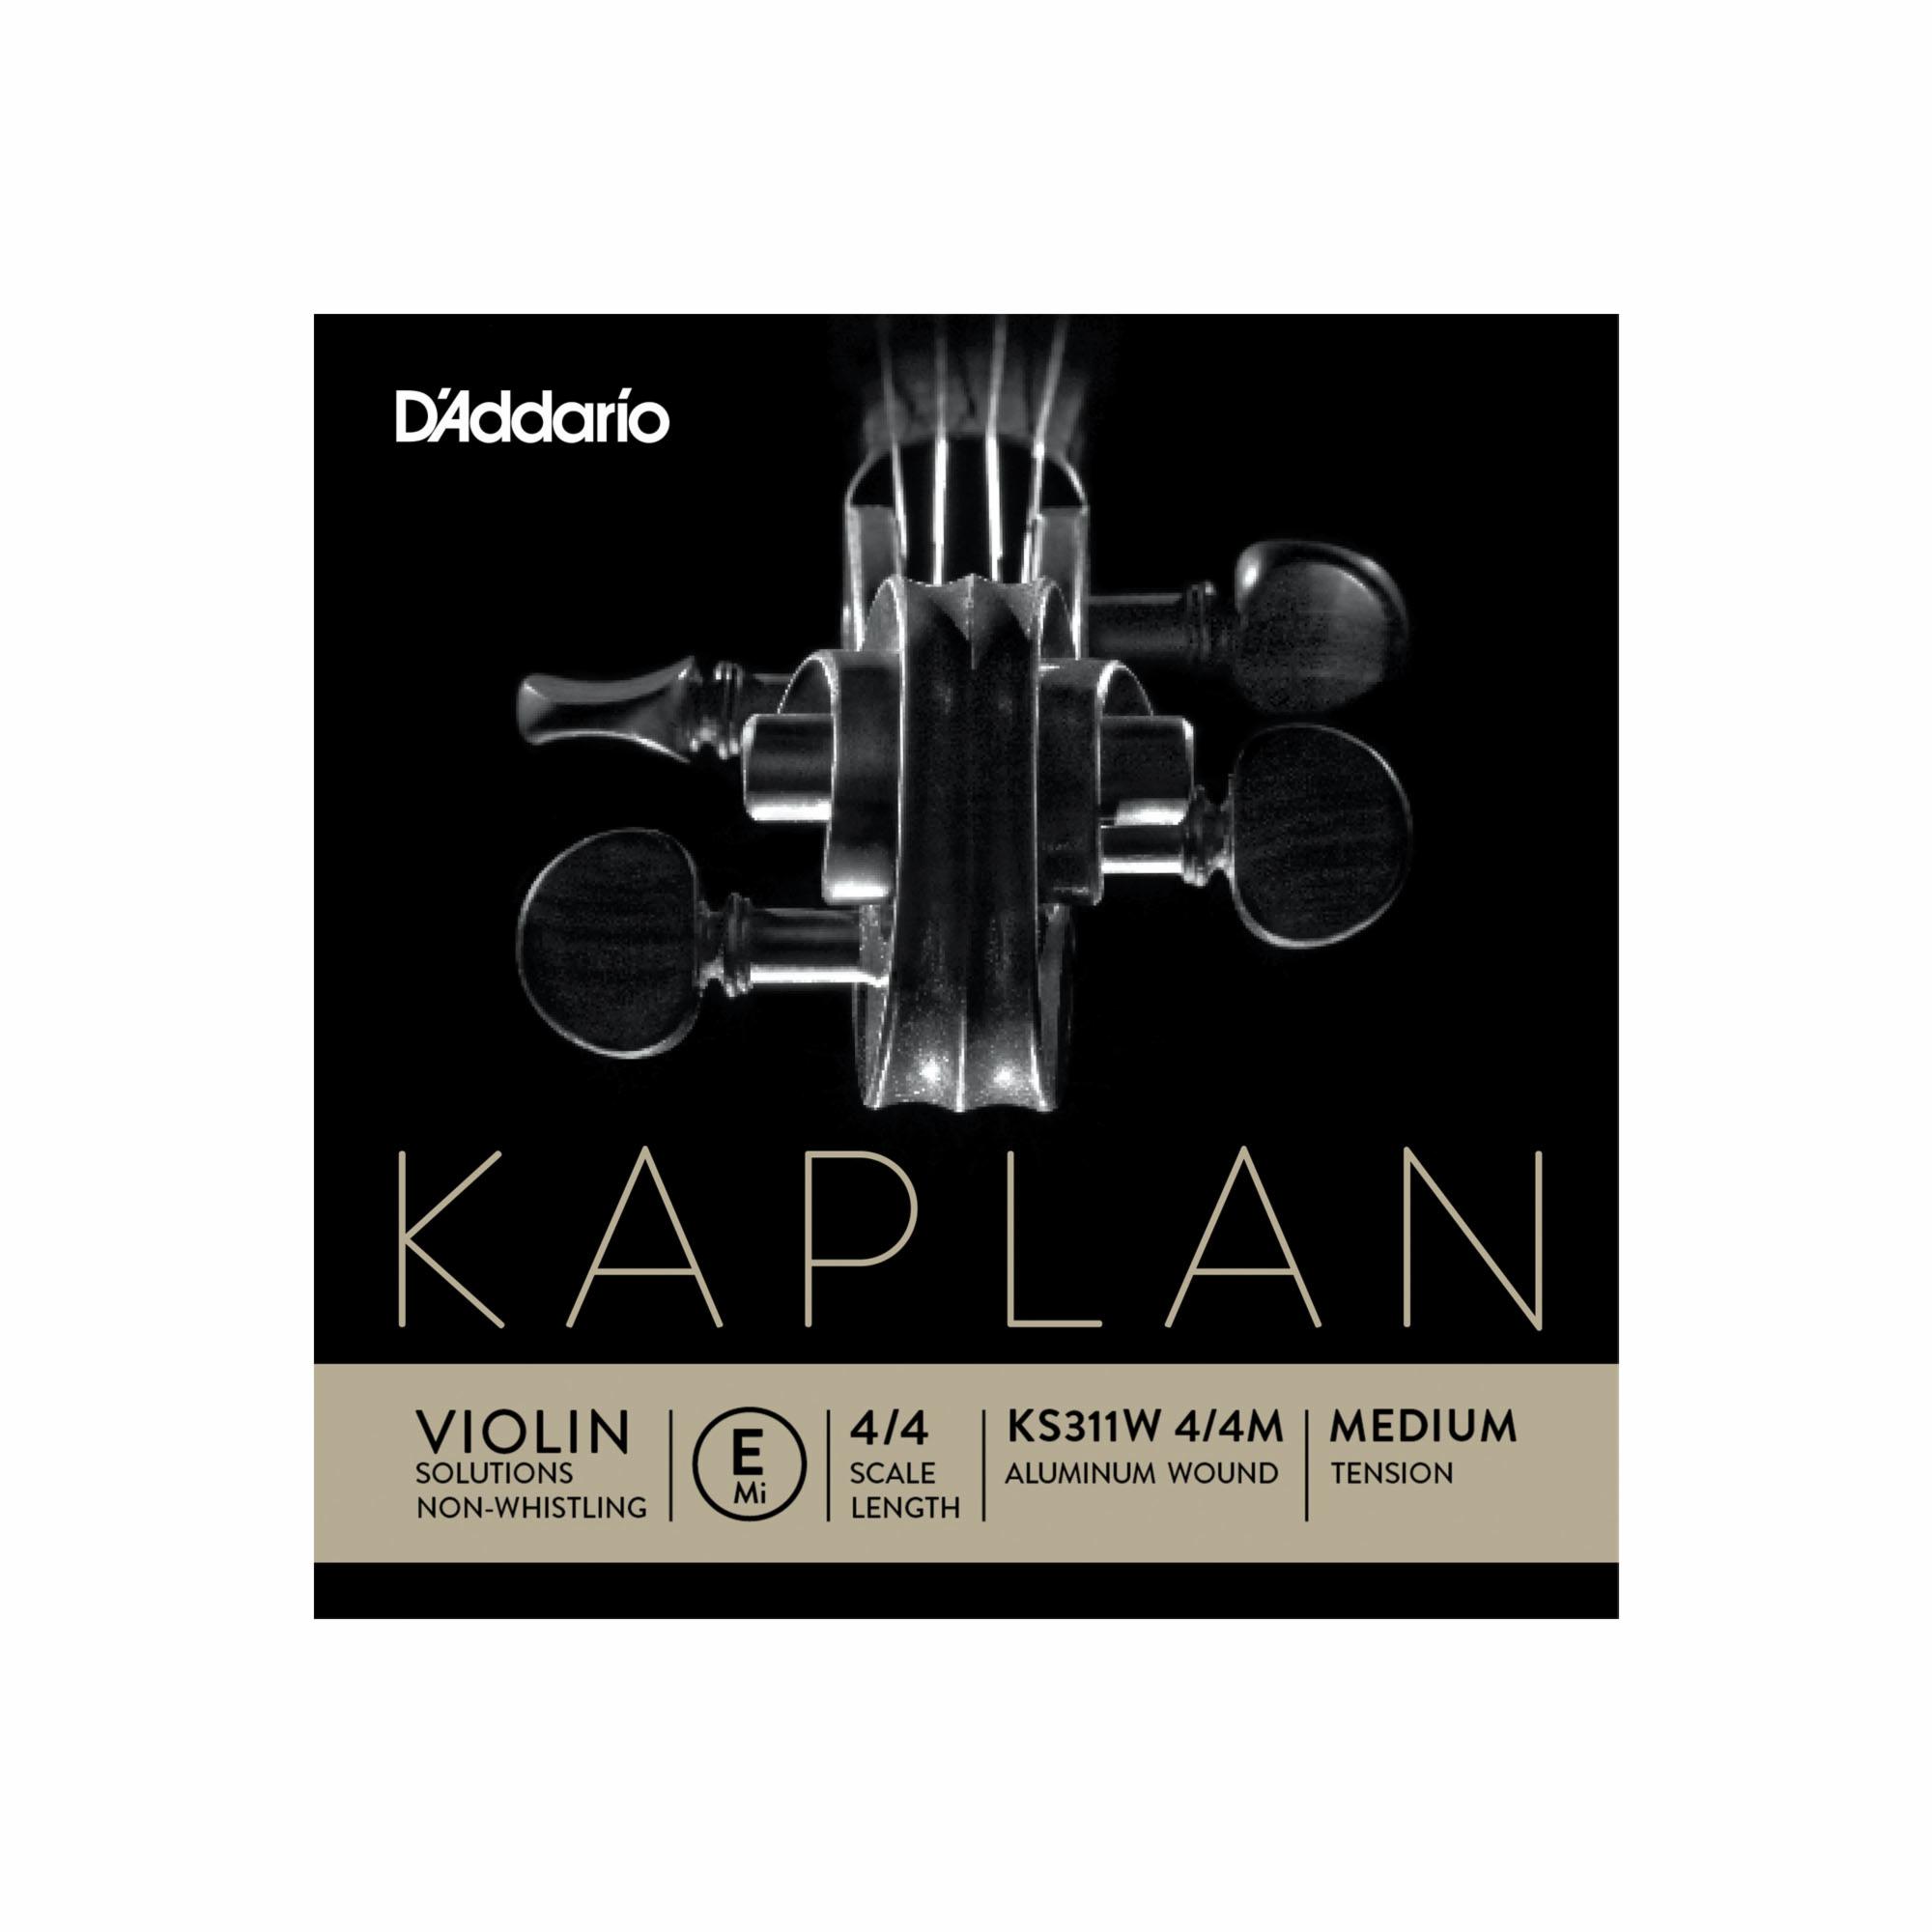 D'Addario Kaplan Solutions Violin E String